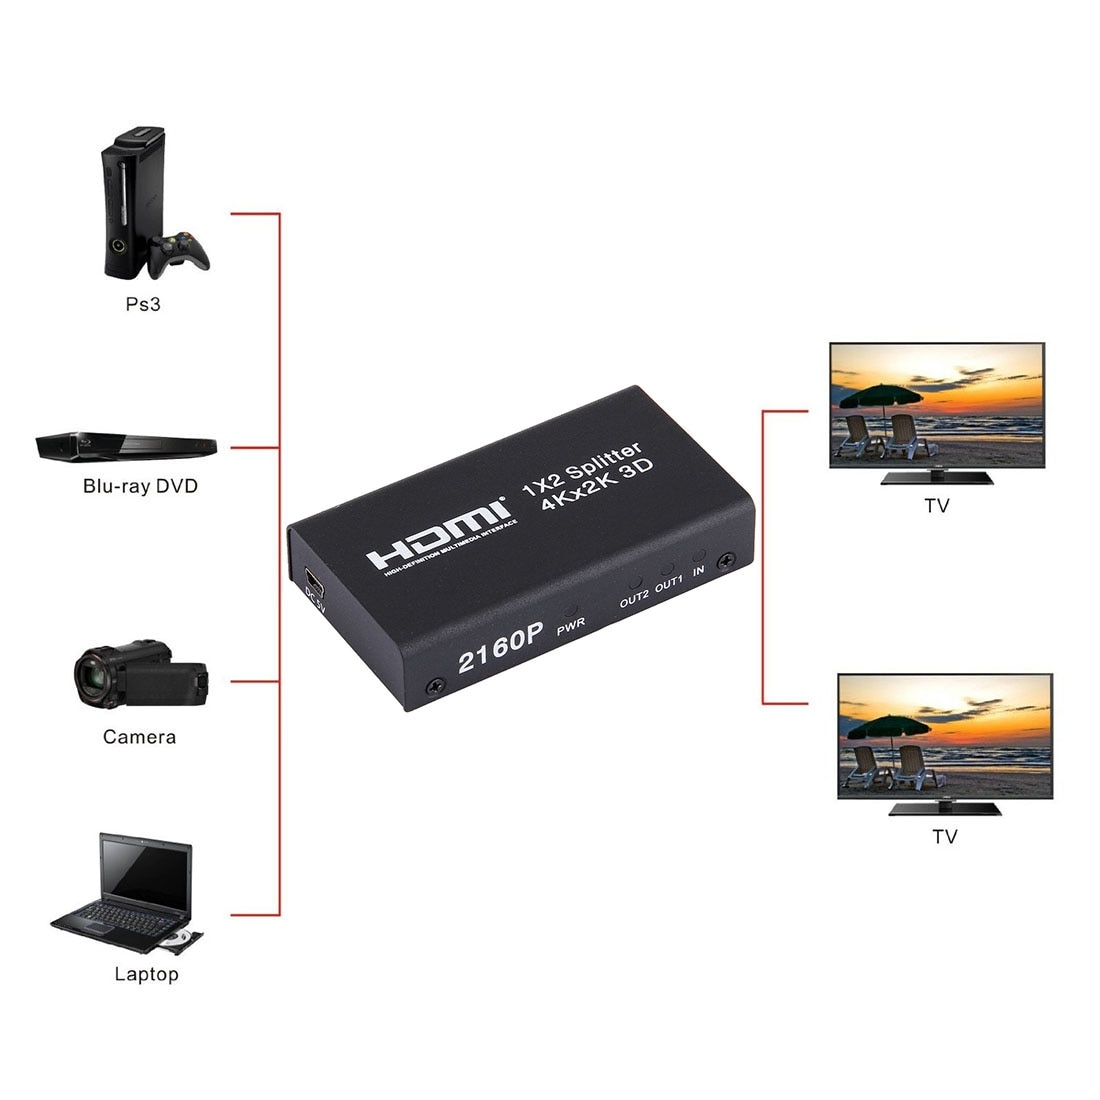 HDMI 1x2 2160P Switch Splitter, Support 4Kx2K, 3D